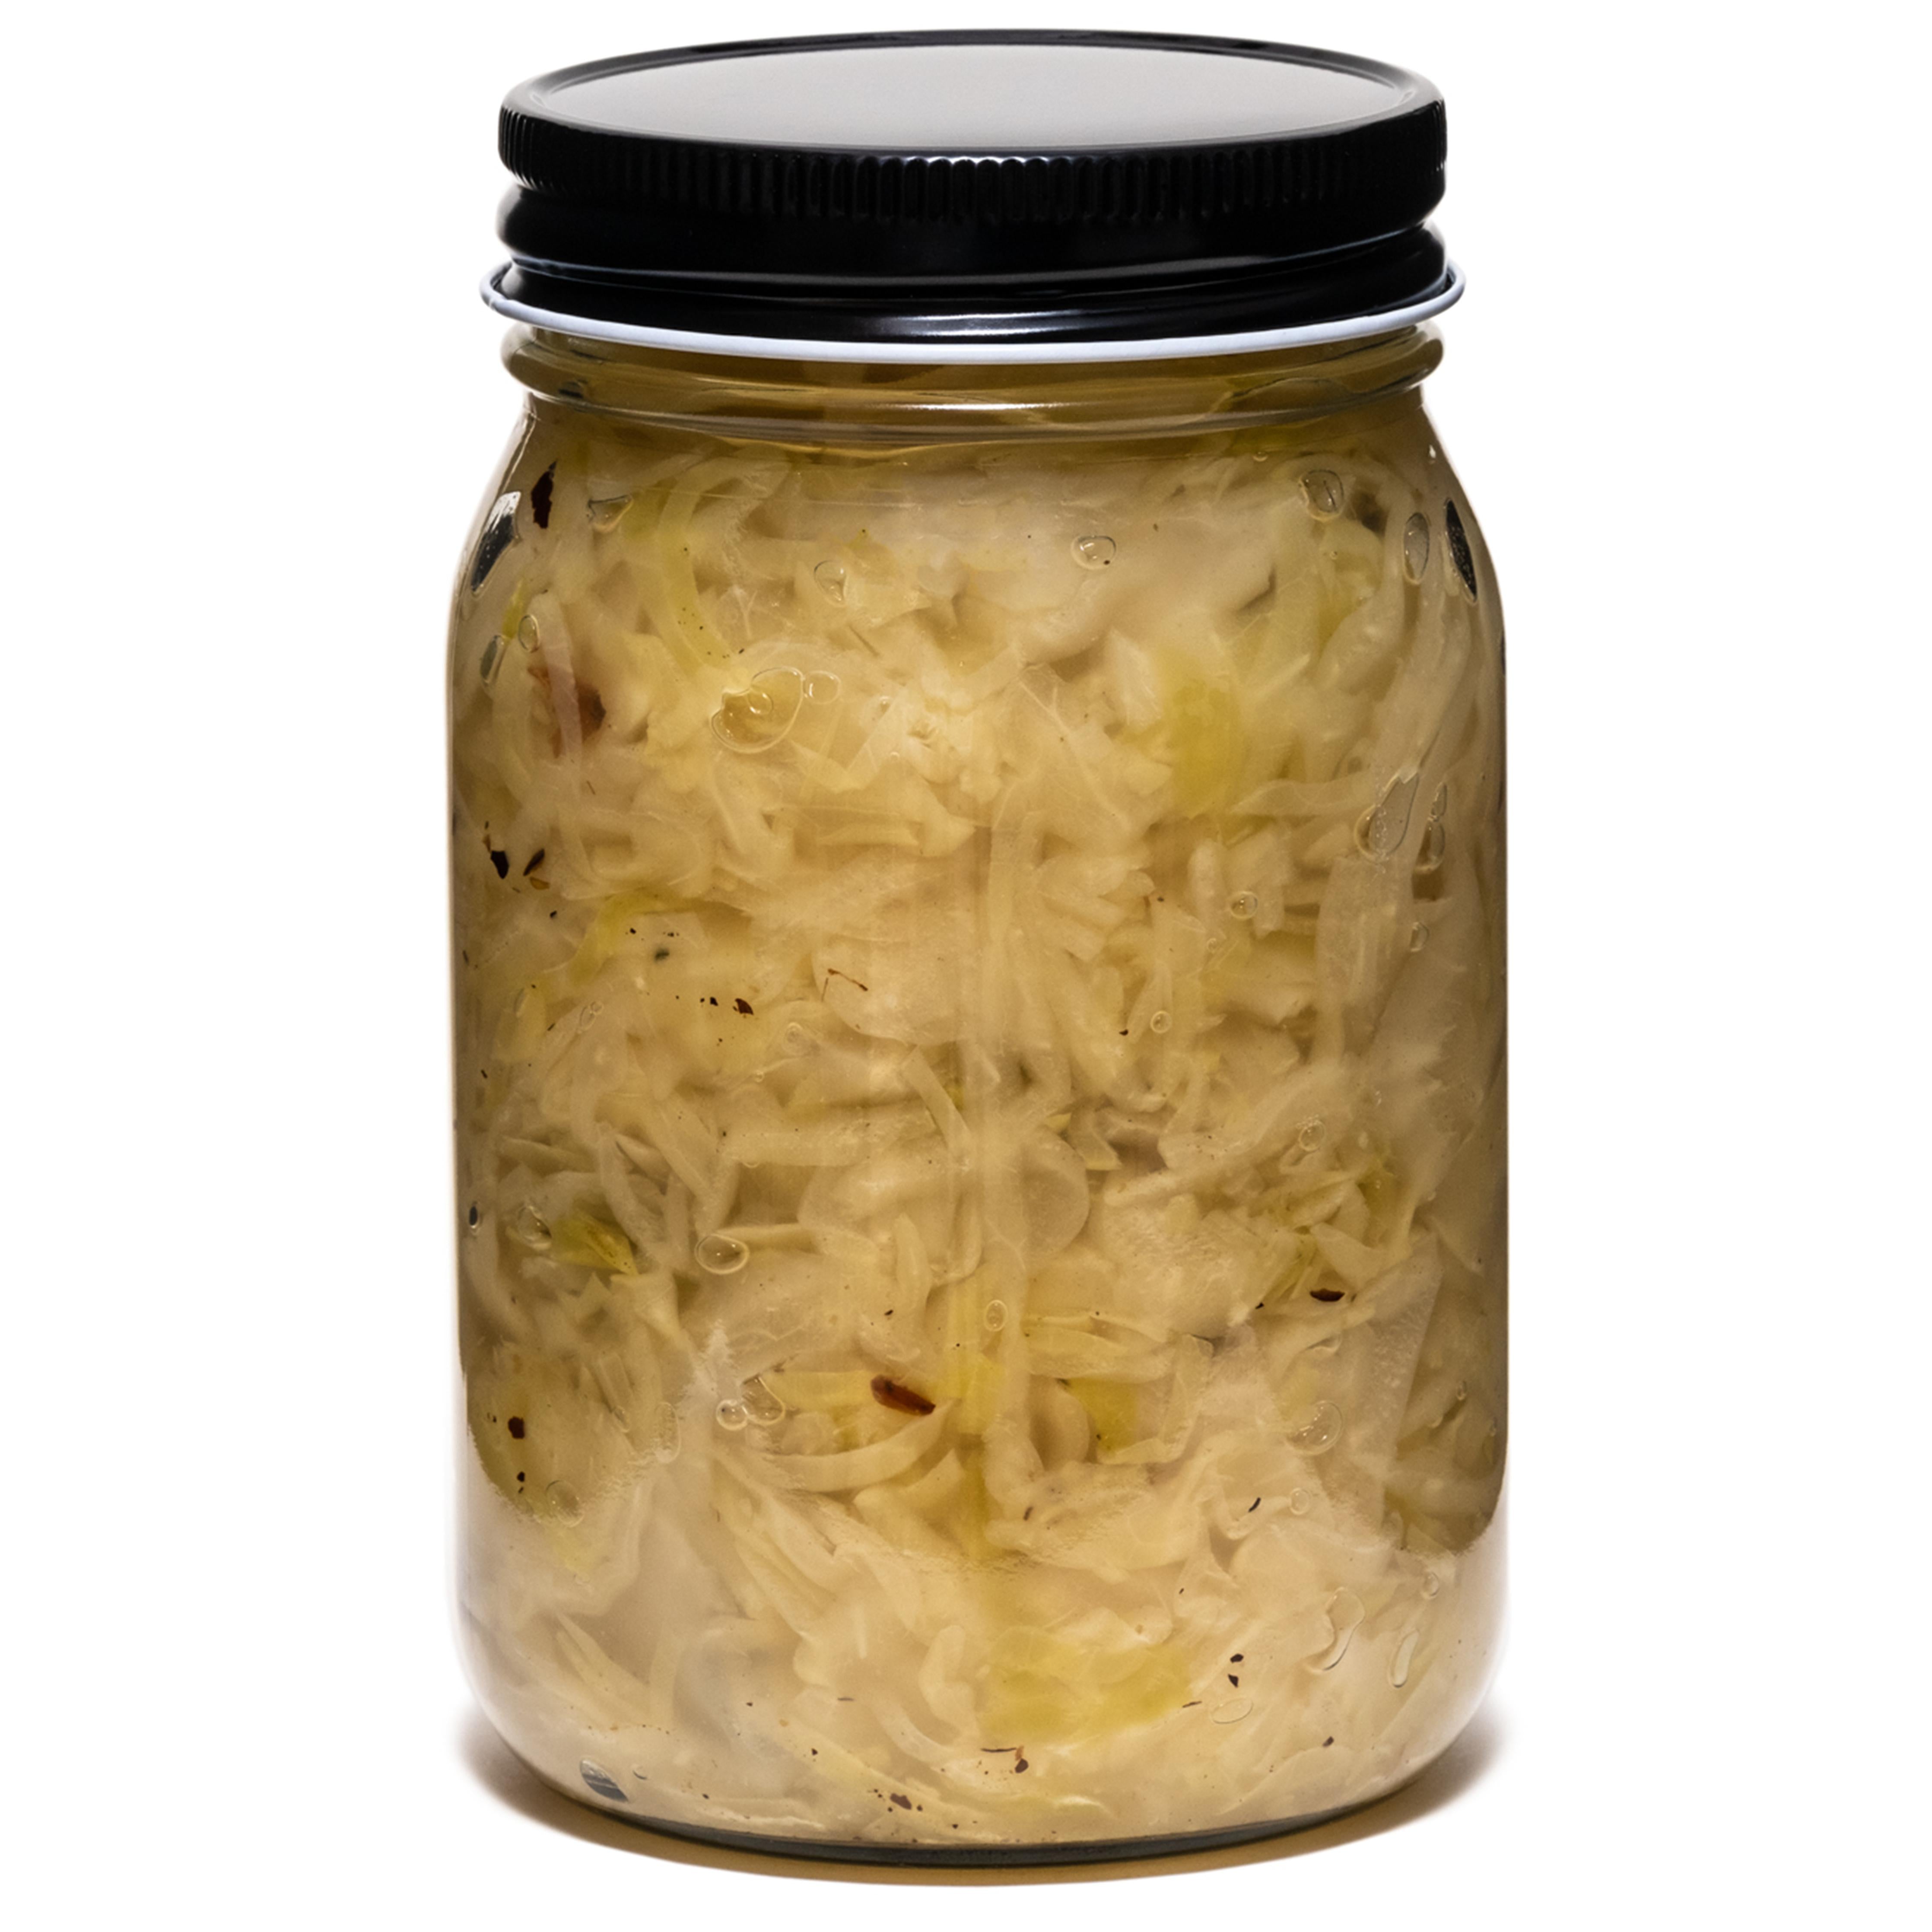 Organic sauerkraut with juniper berries - Pascualita - Tout cru! Fermentation